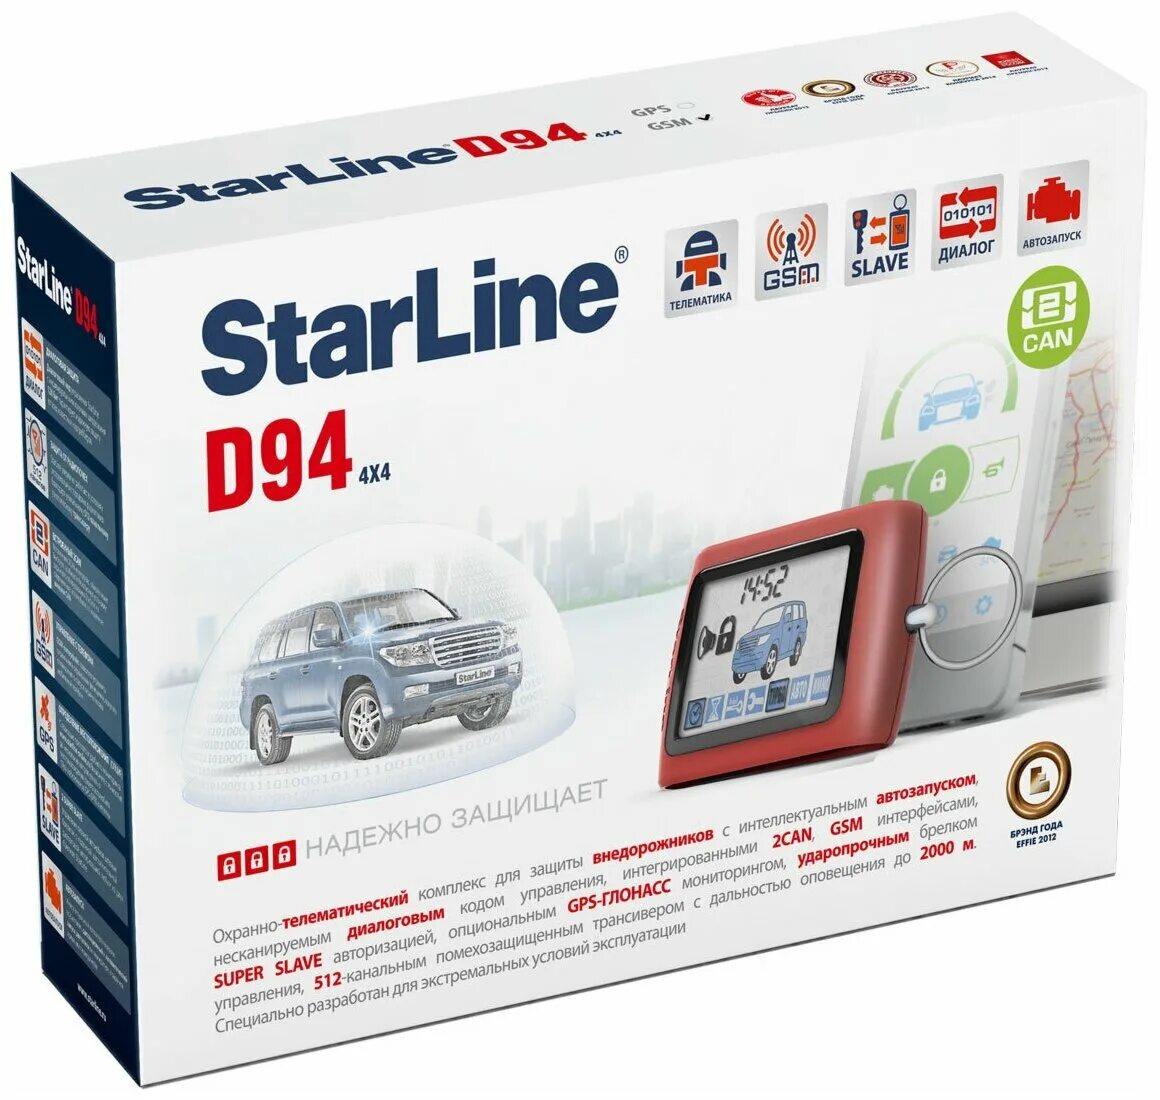 Старлайн gsm цена. STARLINE d94. Старлайн d94 GSM. Старлайн d94 GSM/GPS. STARLINE d94 2can GSM-GPS.